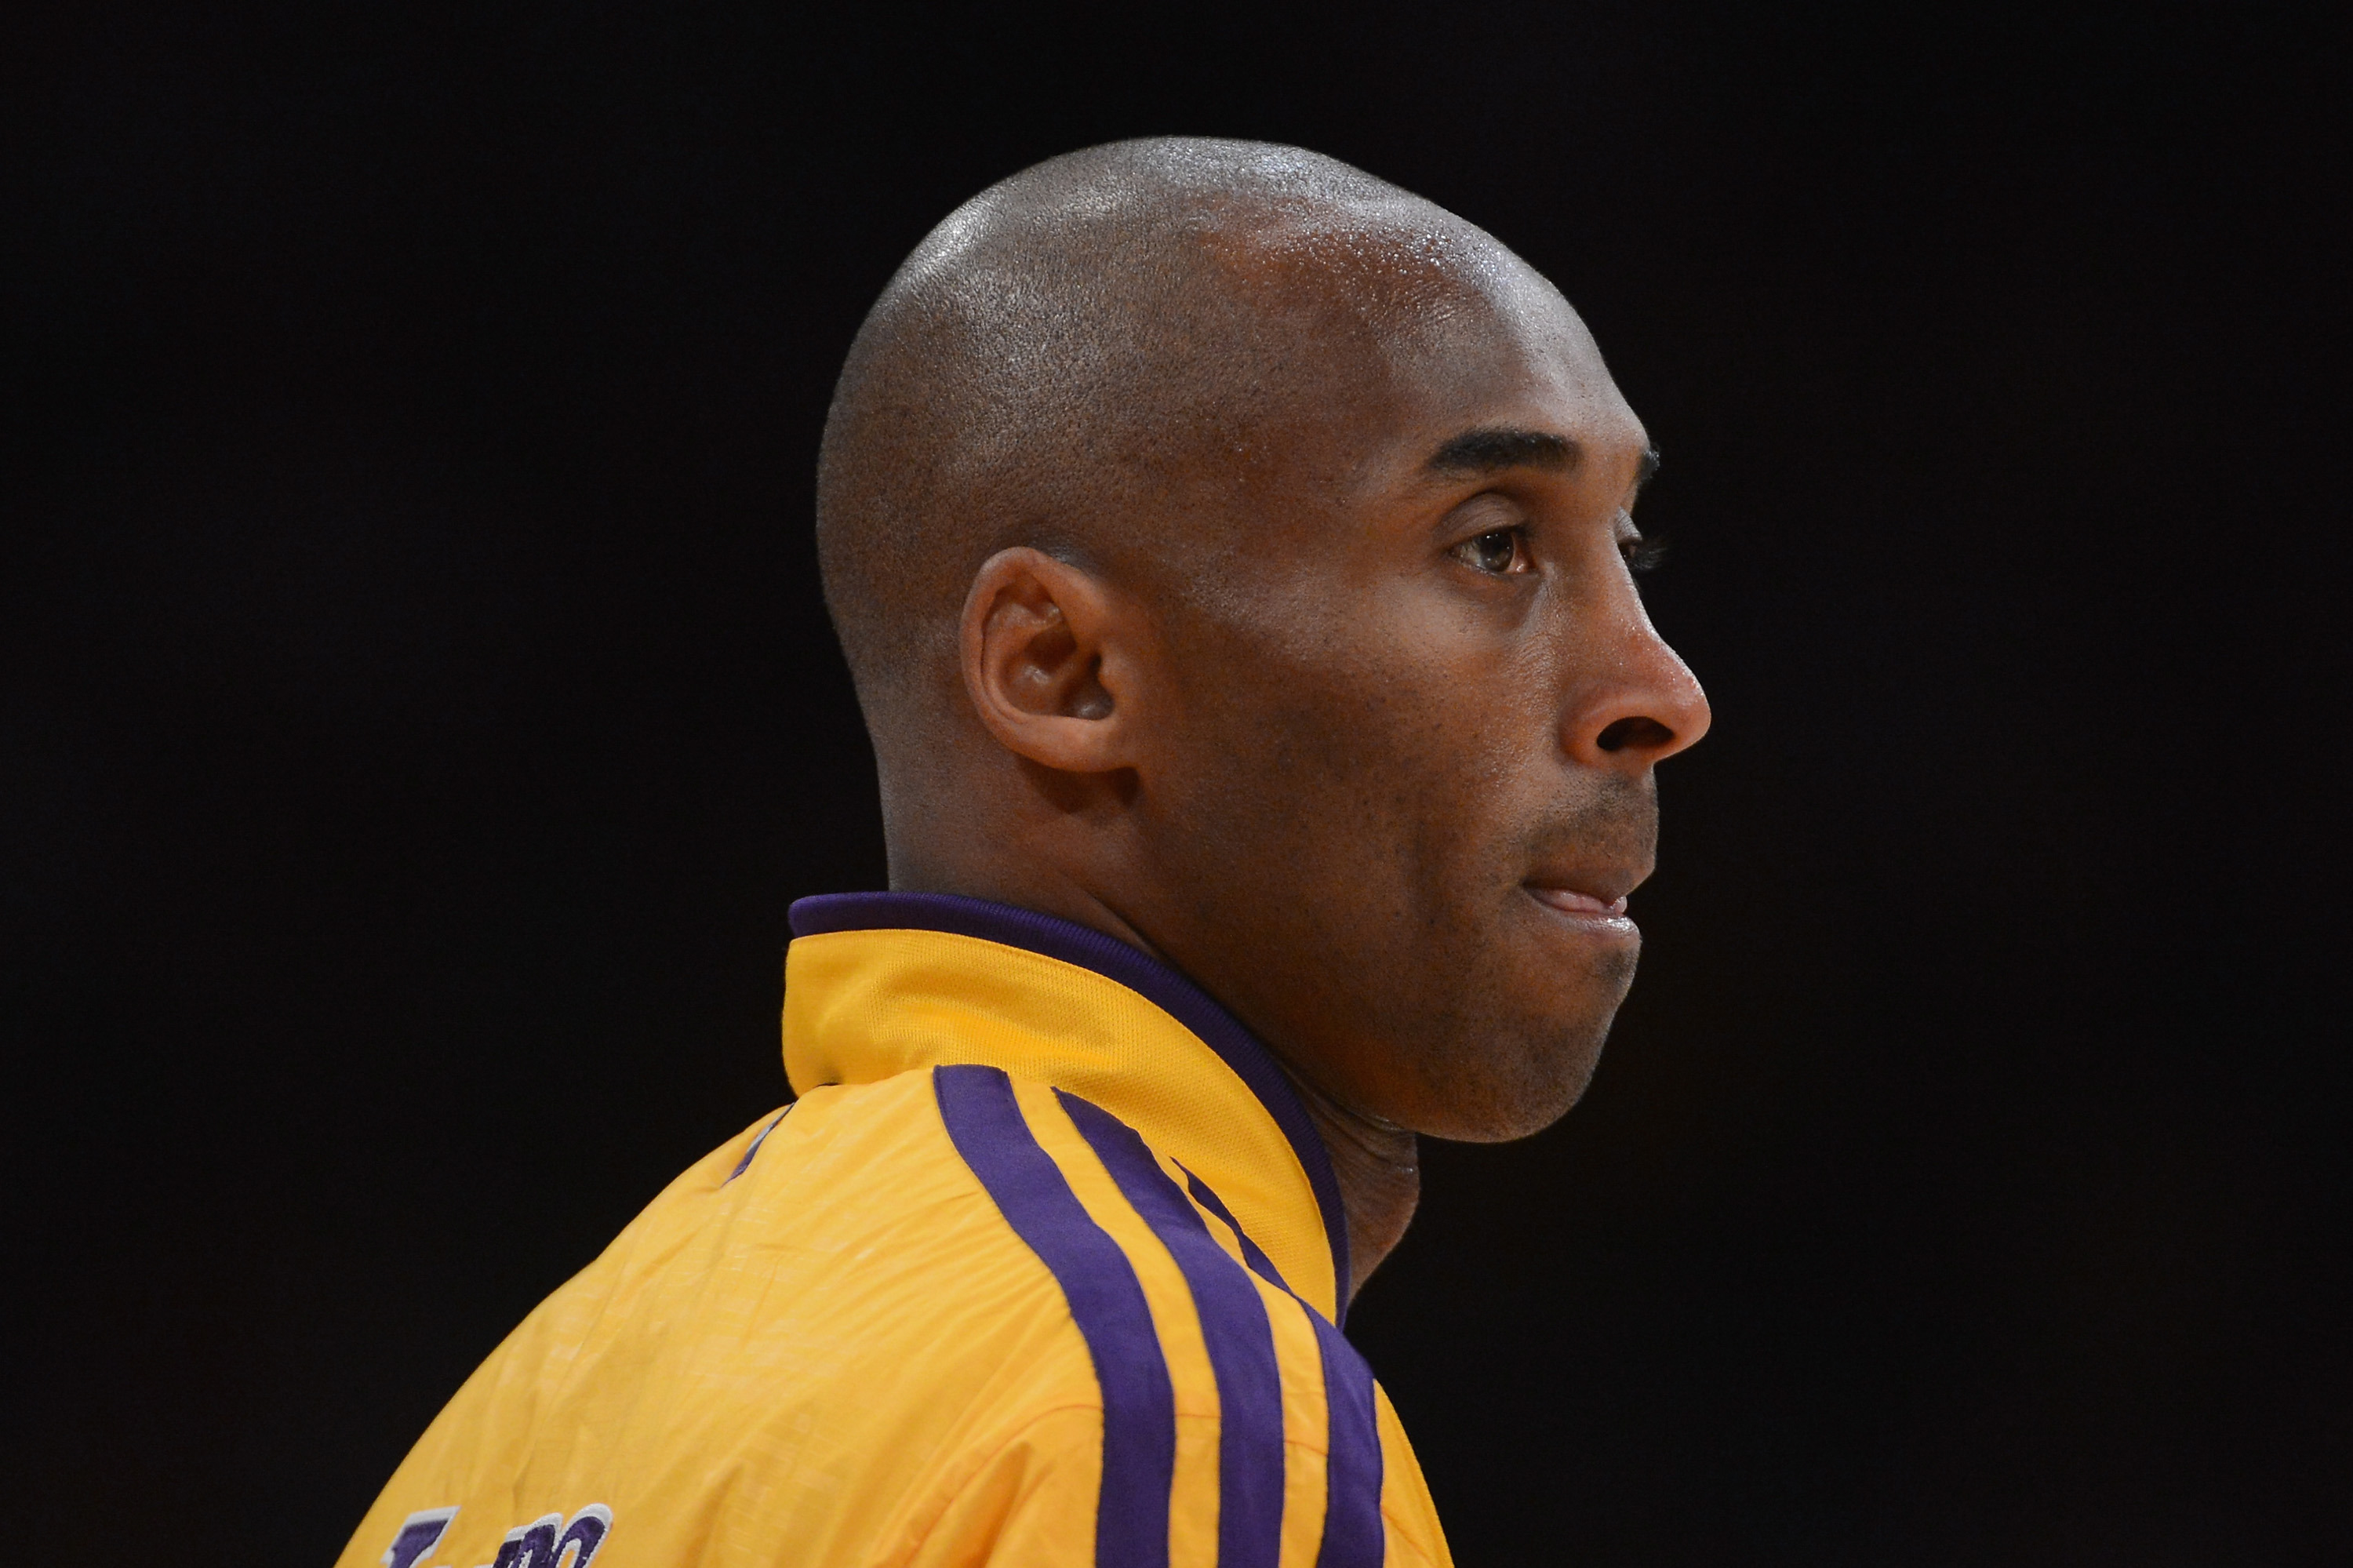 Is Kobe Bryant balding? - Quora